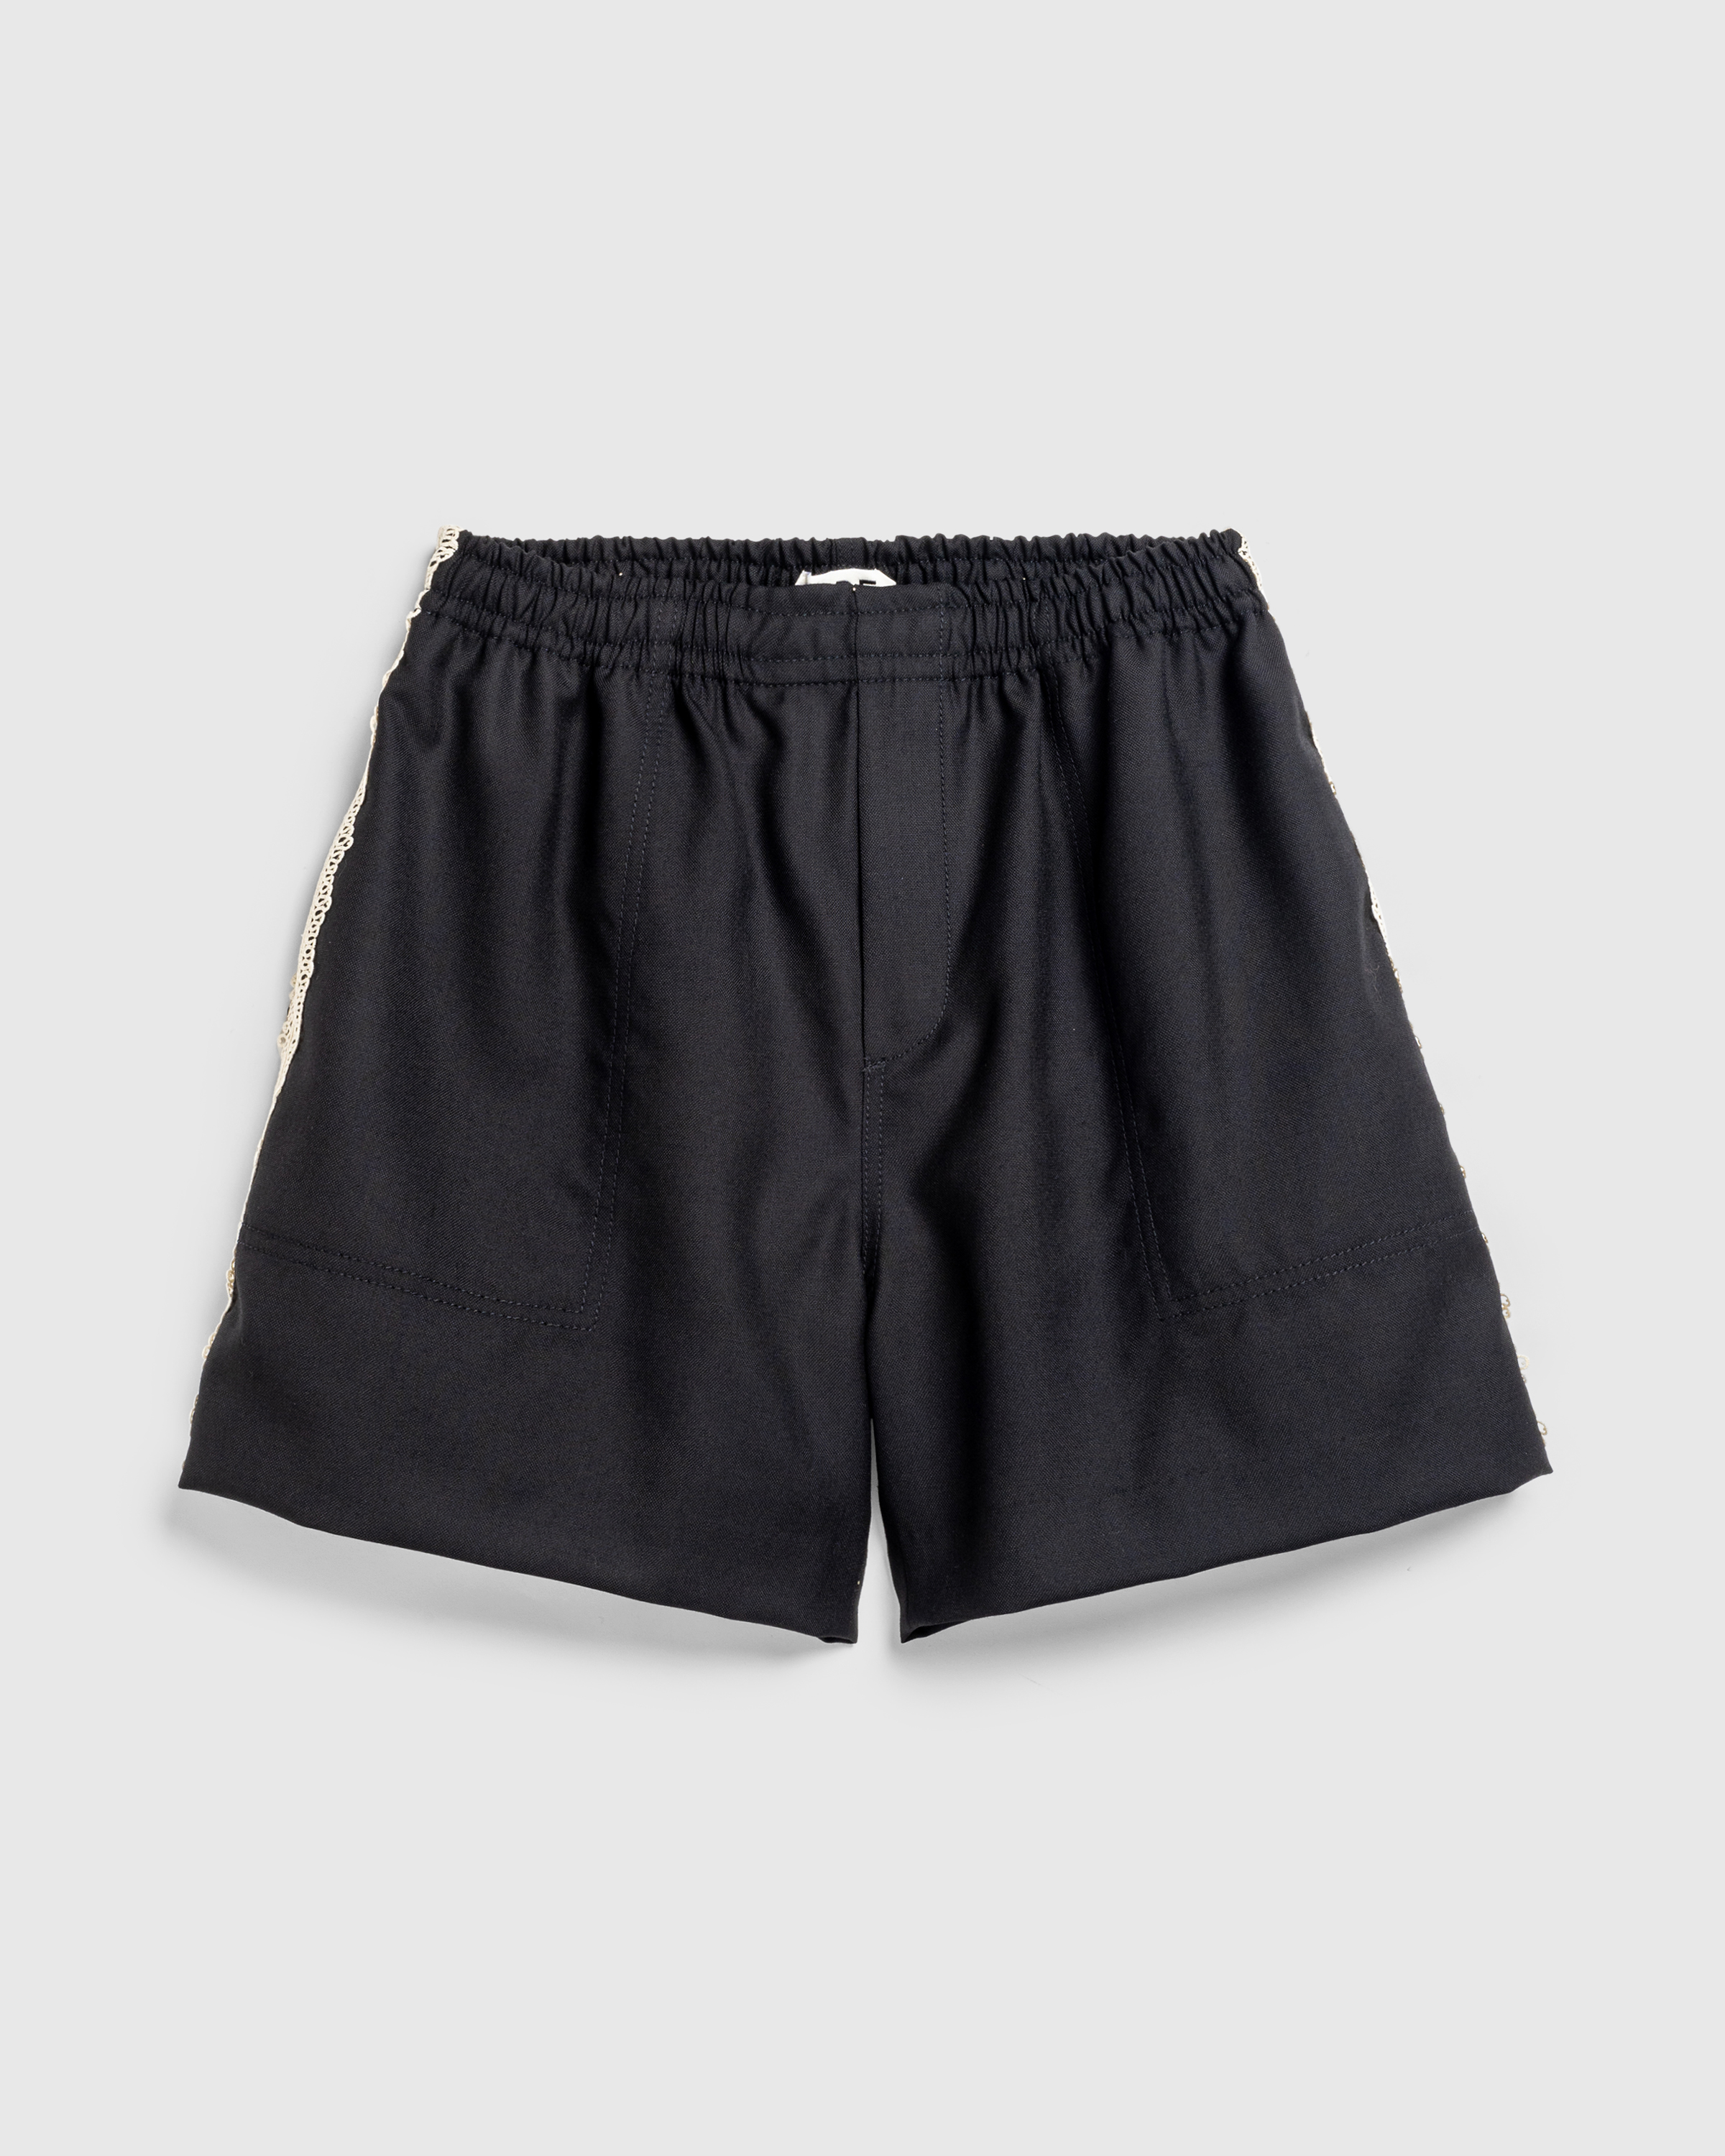 Bode – Lacework Shorts Black - Short Cuts - Black - Image 1